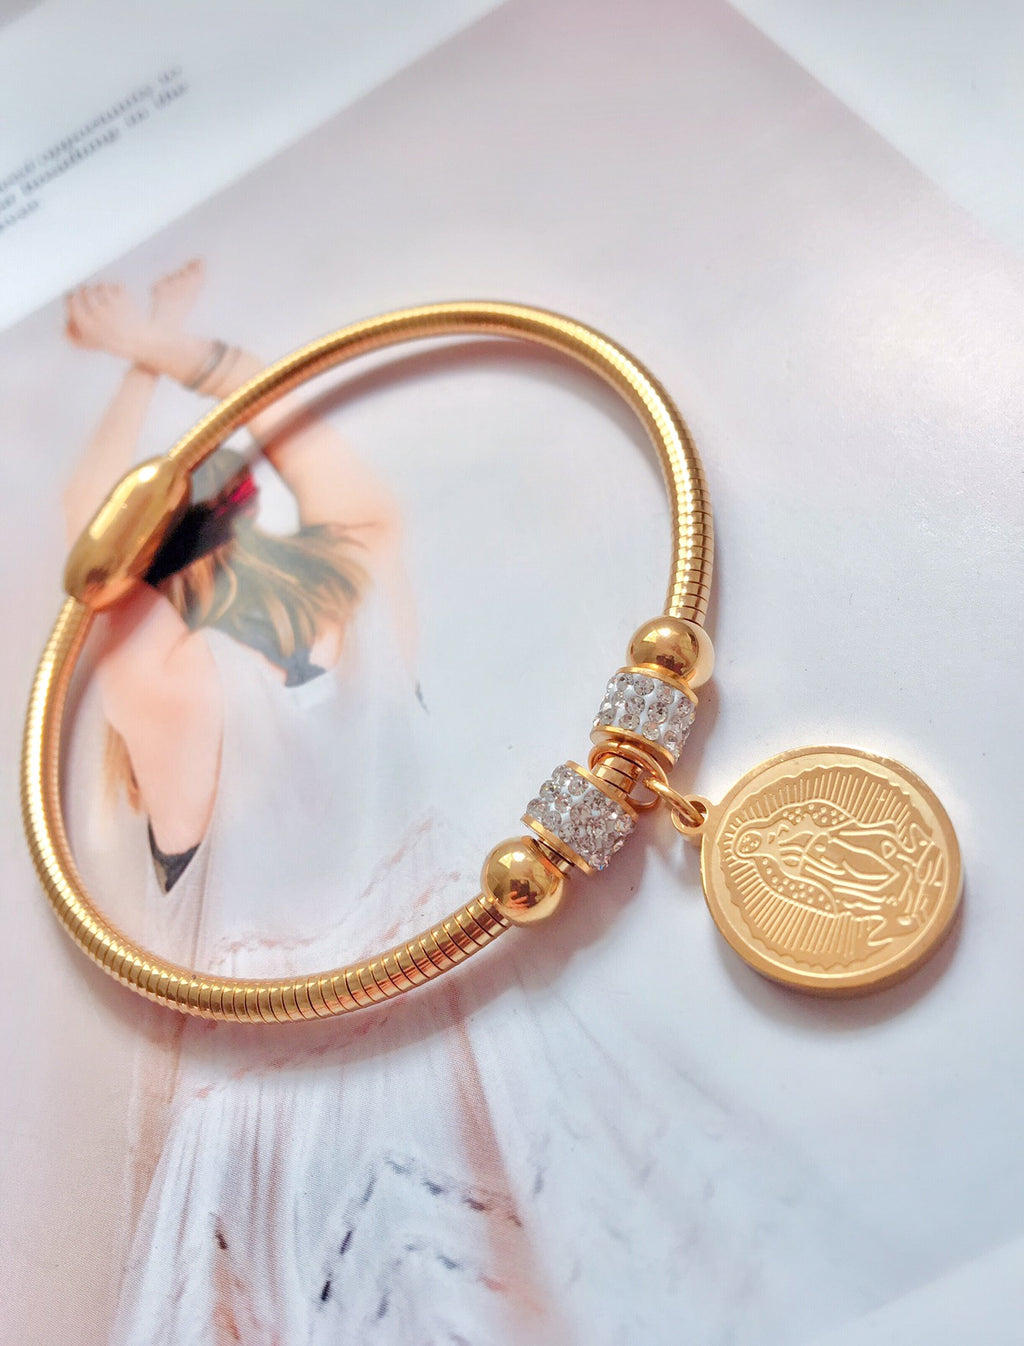 Premium Quality Virgin Mary & Heart Two-tone Bracelet